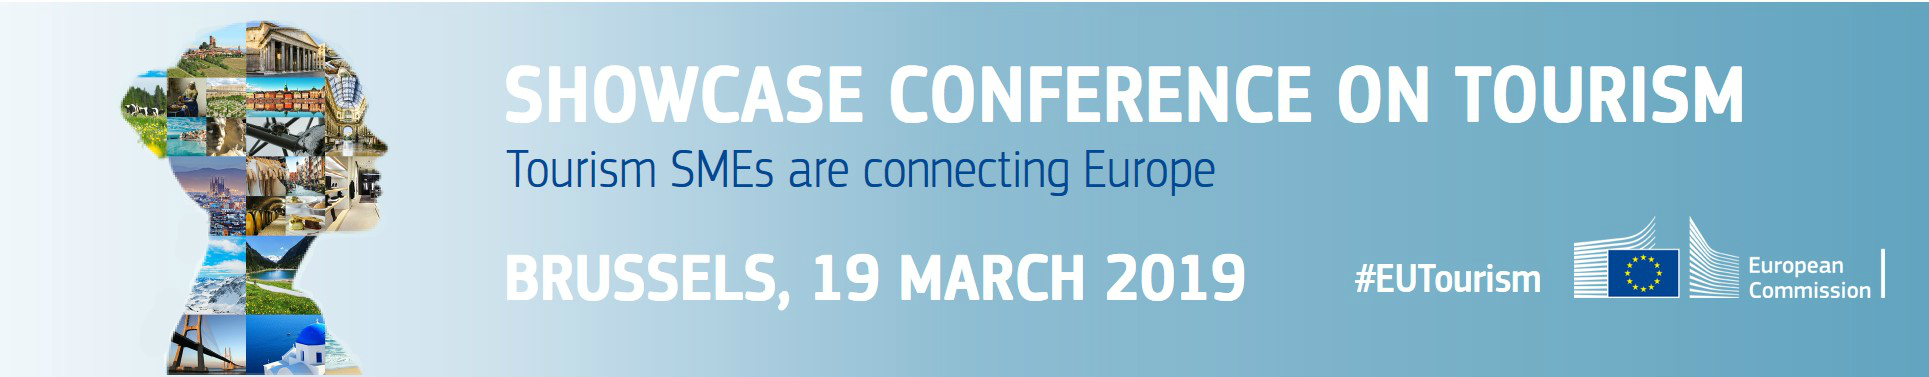 EU Tourism Showcase conference banner 2019